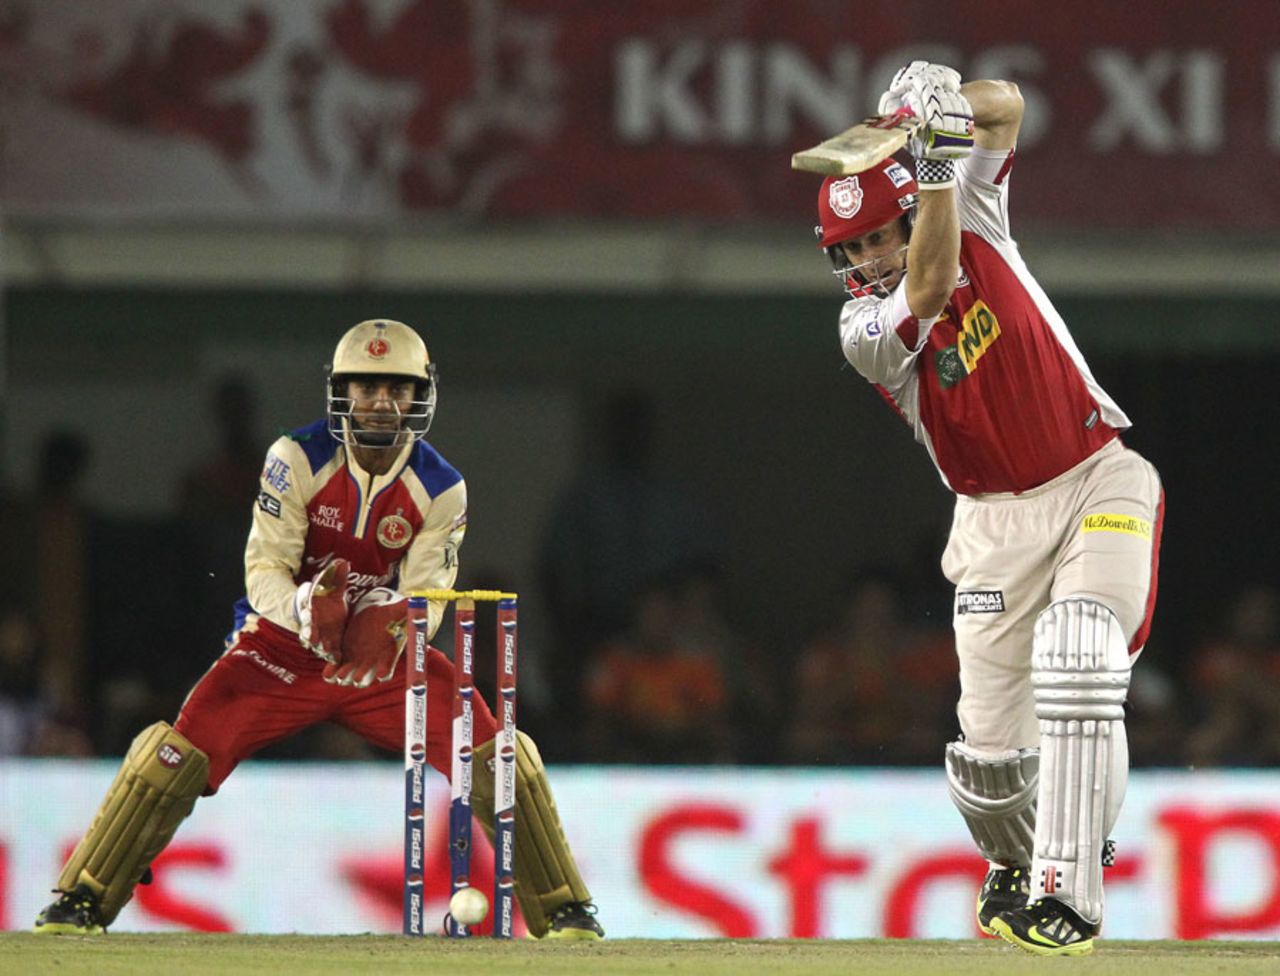 David Hussey drives a ball through the offside, Kings XI Punjab v Royal Challengers Bangalore, IPL 2013, Mohali, May 6, 2013